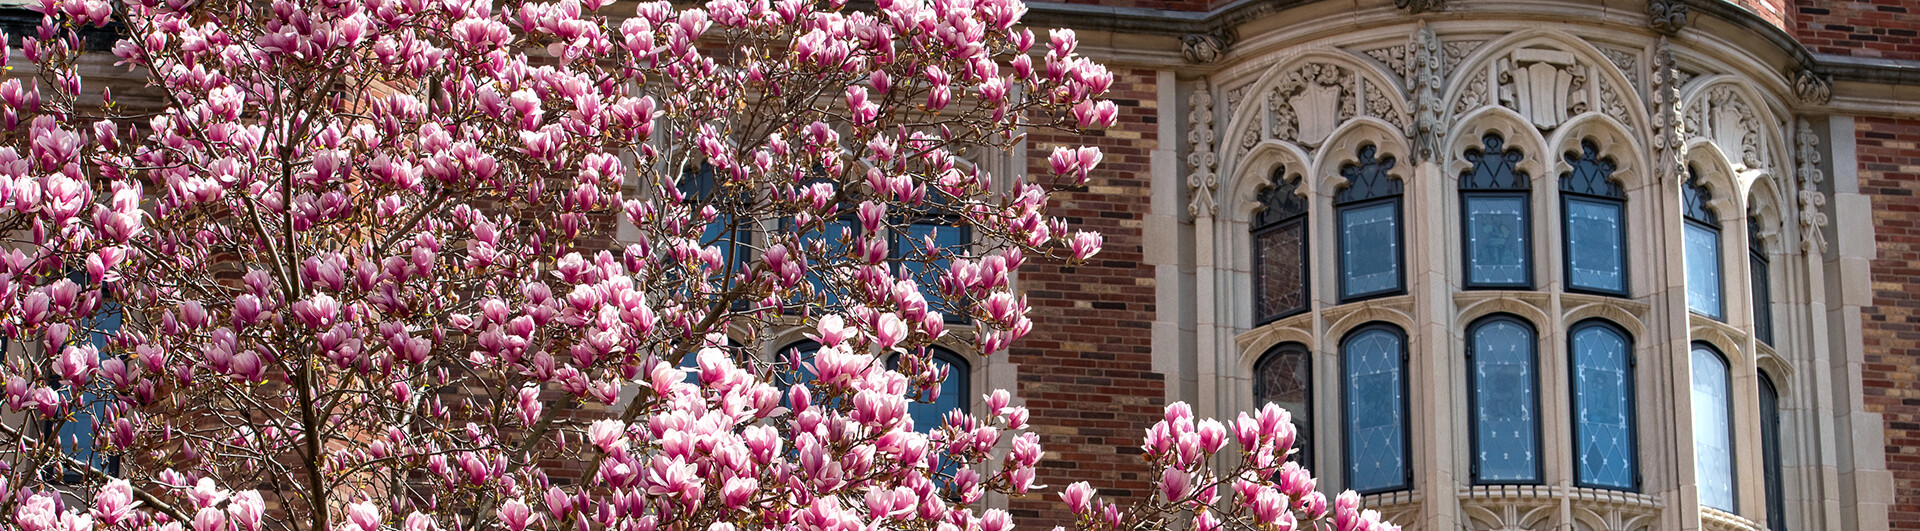 magnolia in bloom against YLS facade